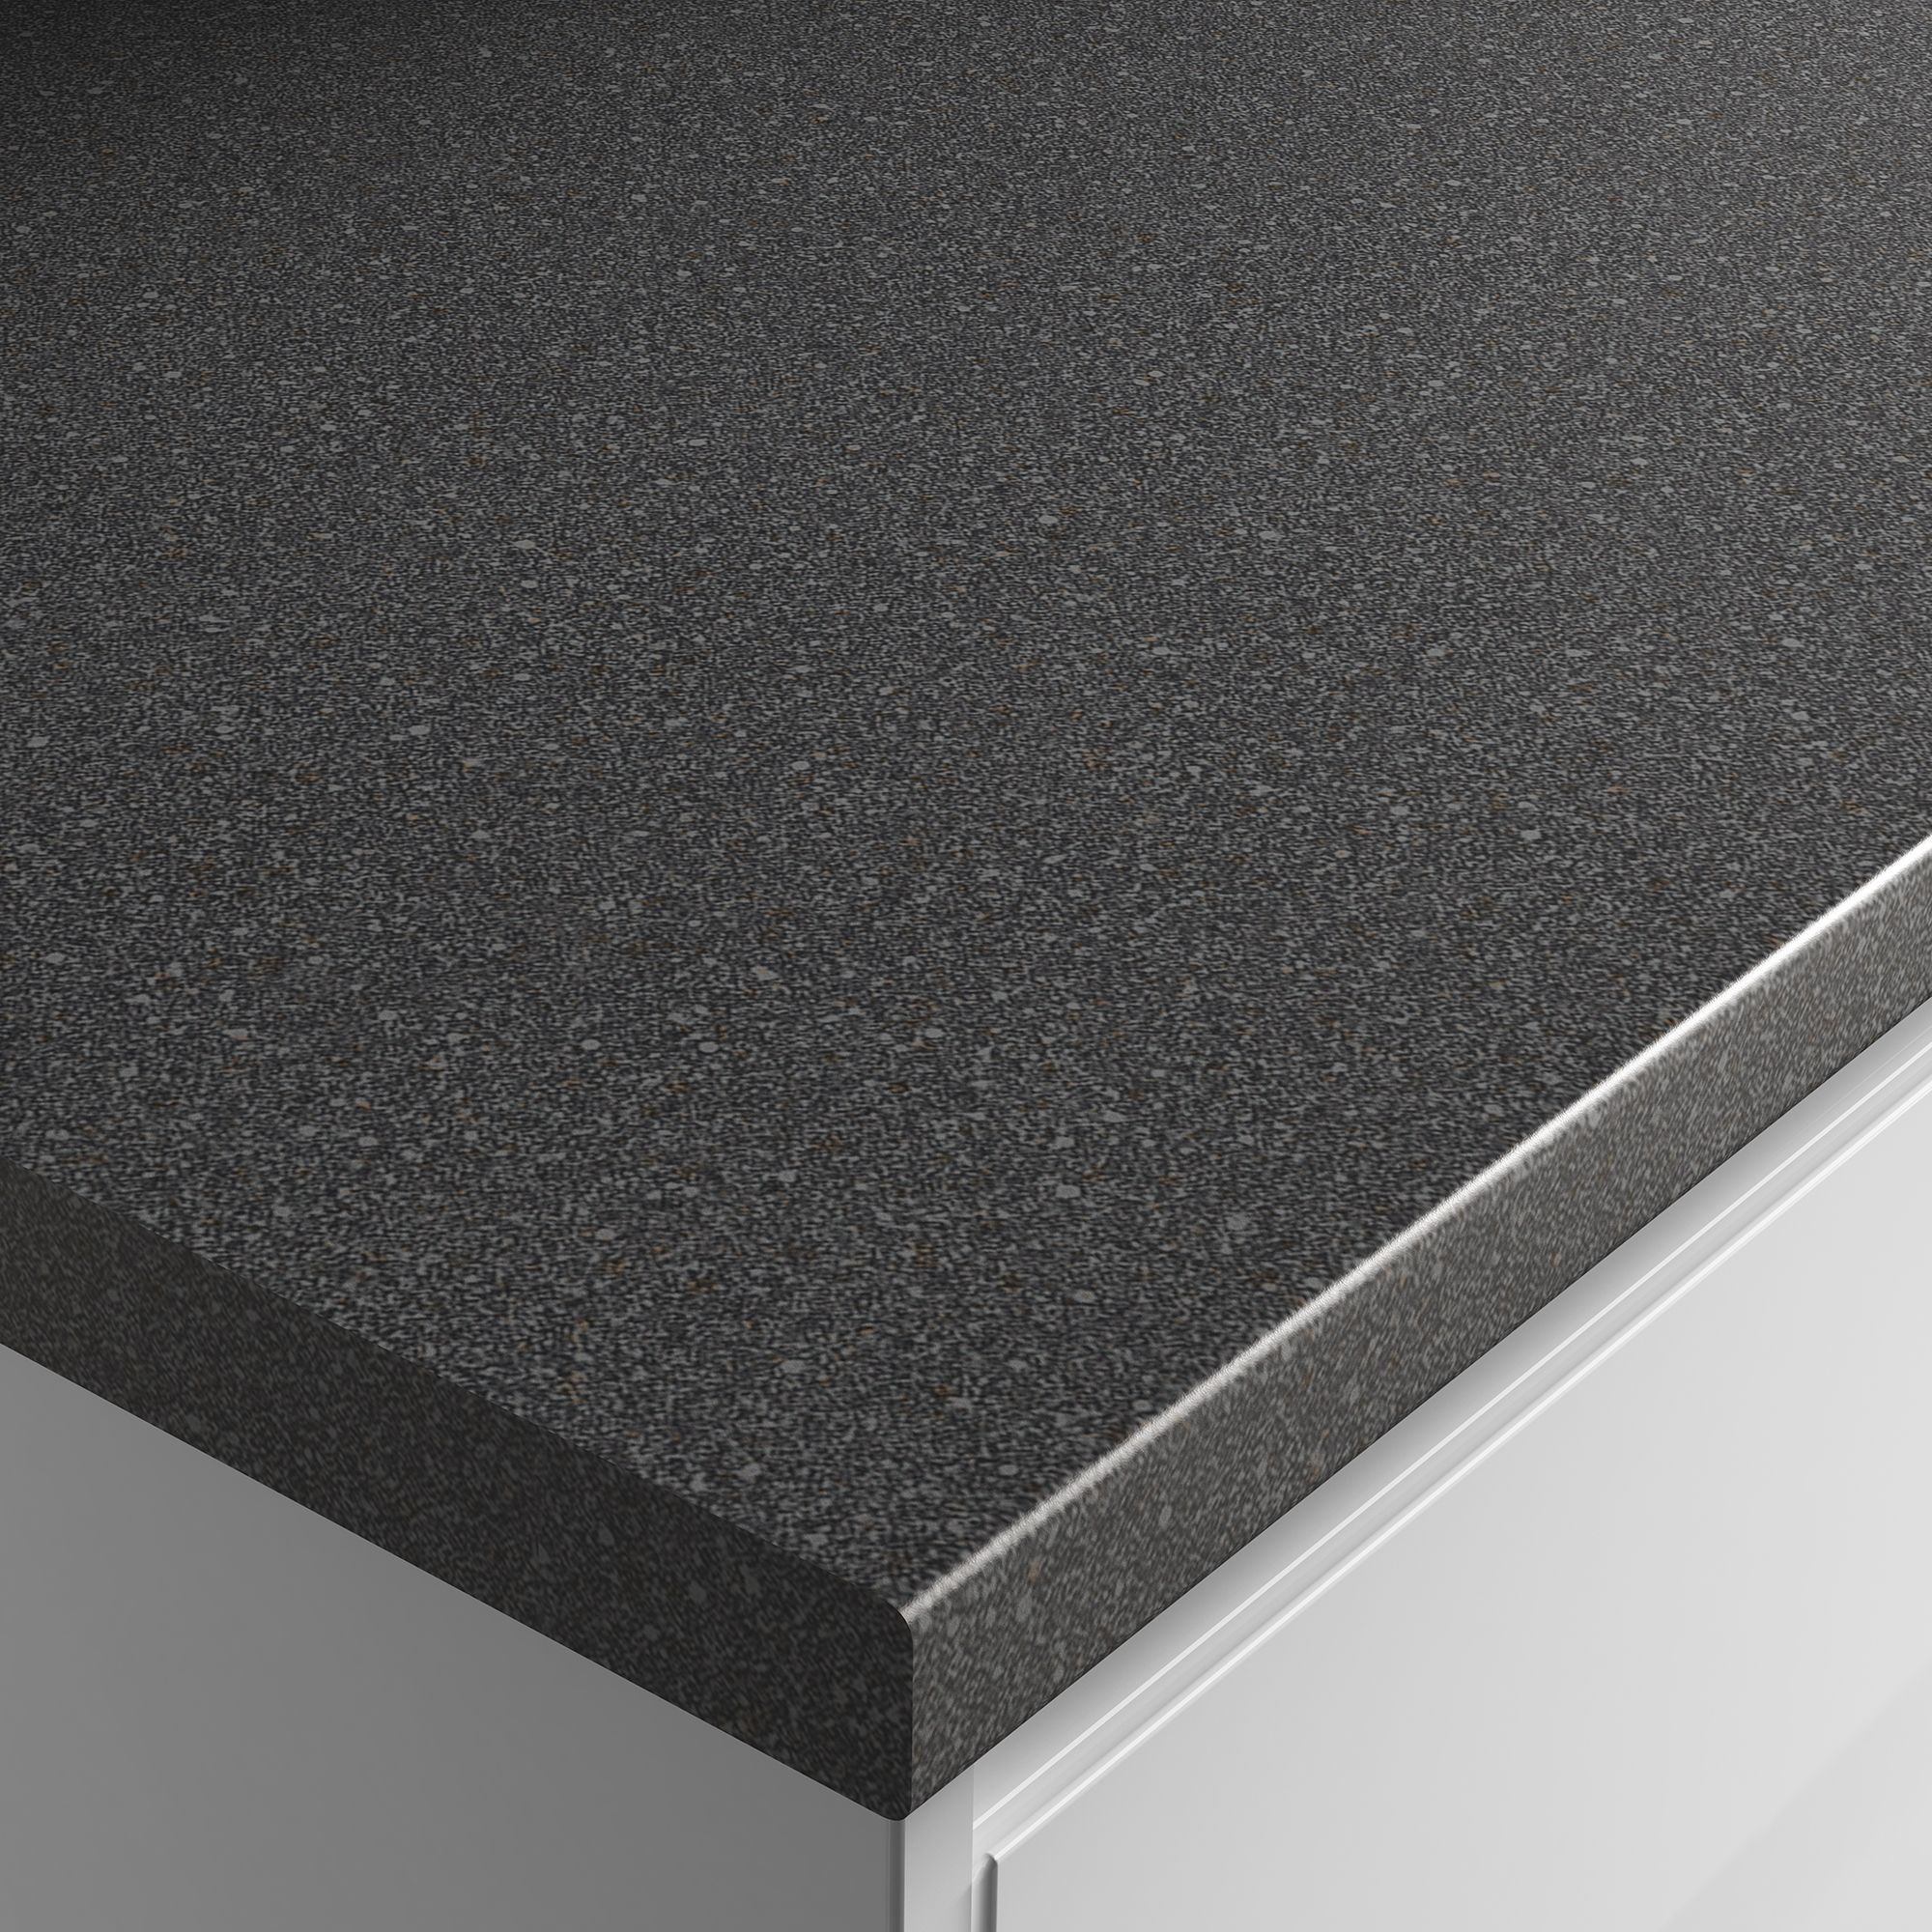 Image of Noir Granite Laminate Worktop - 600mm x 28mm x 2m